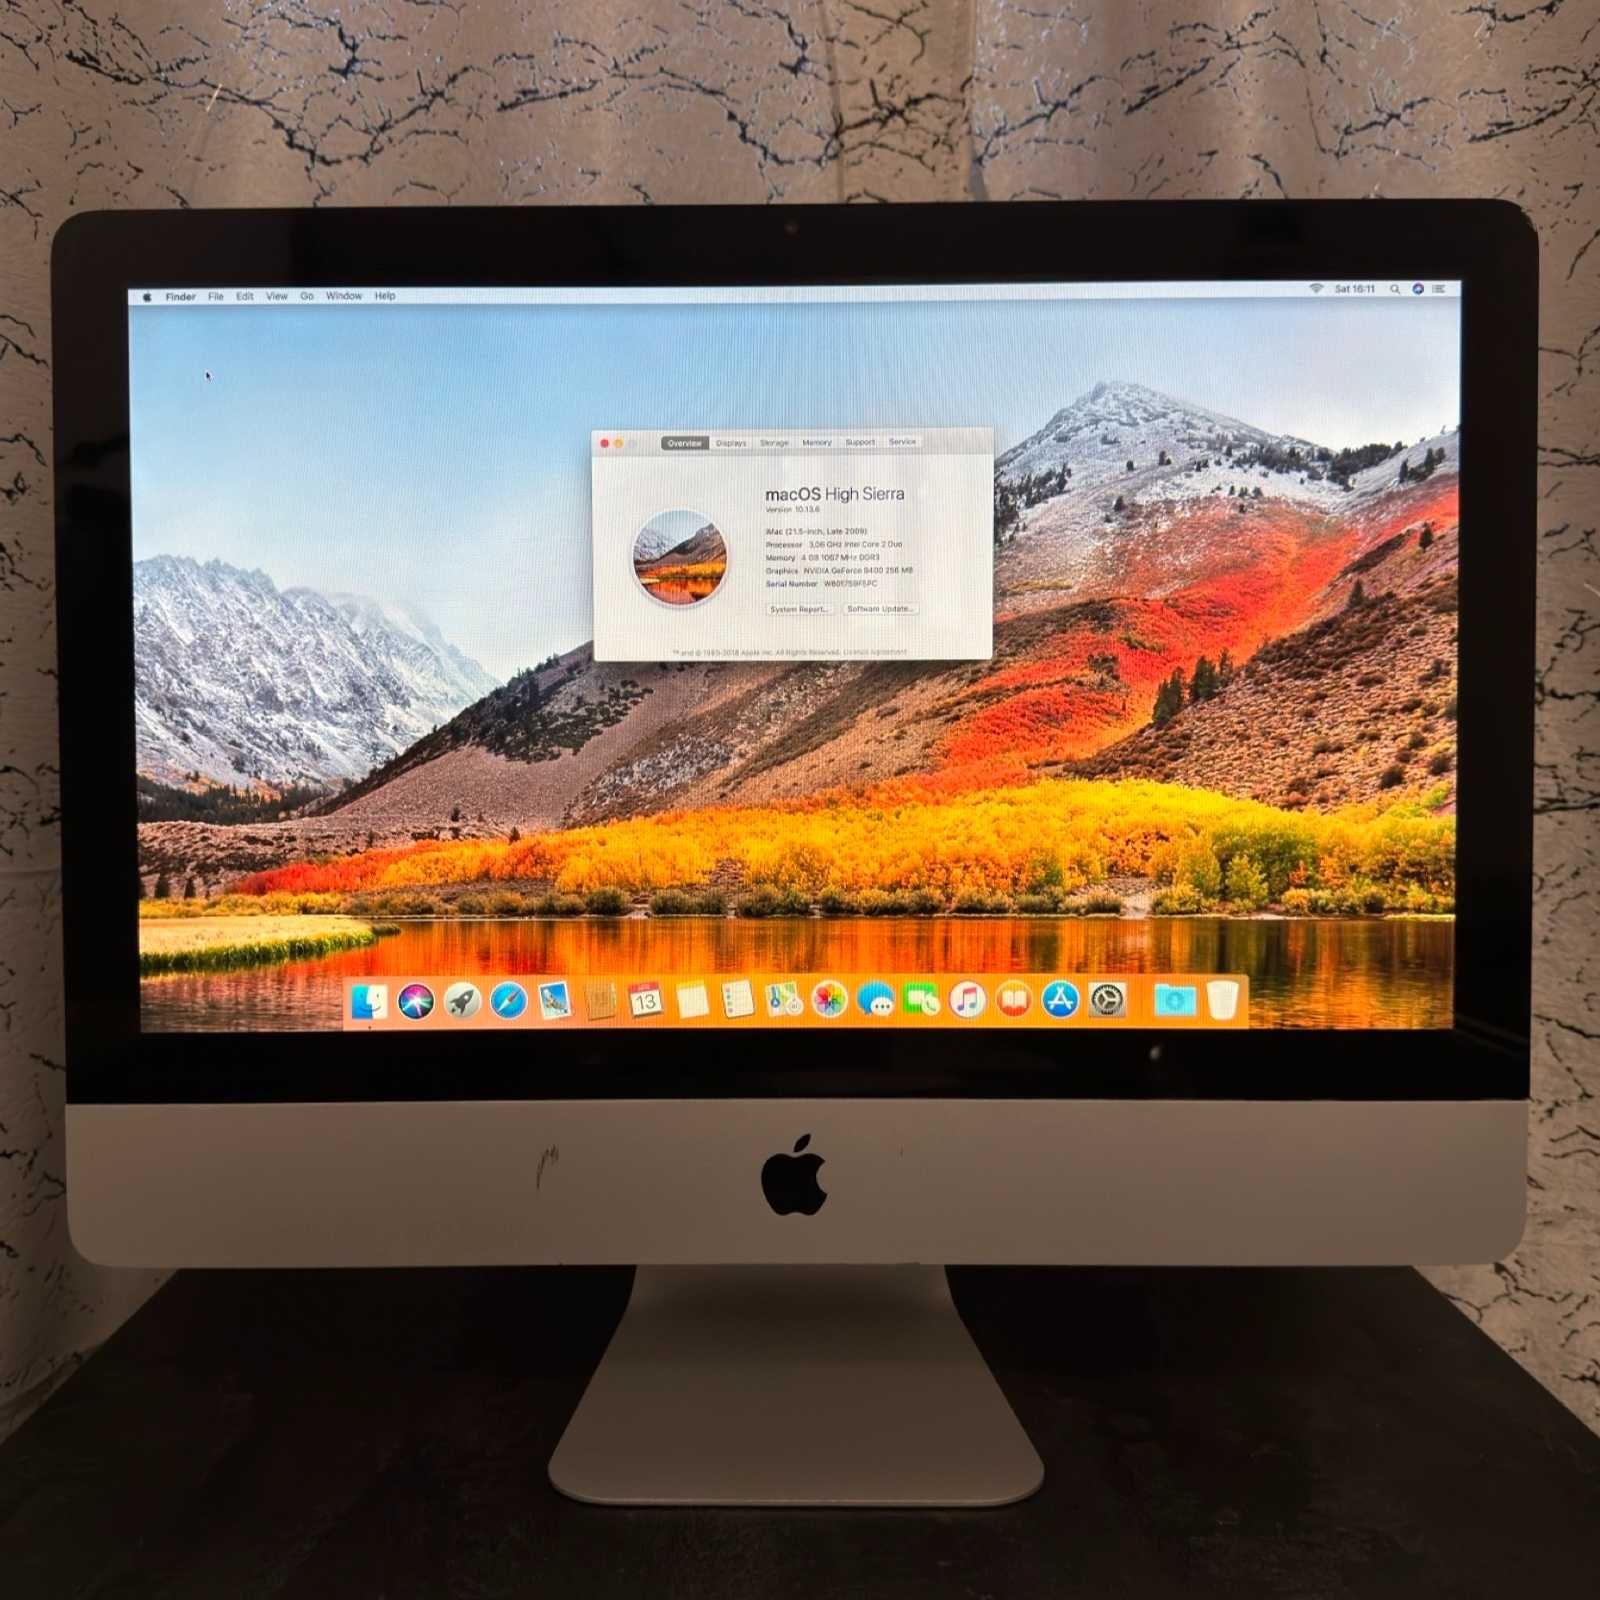 iMac 21.5-inch Late 2009 250GB